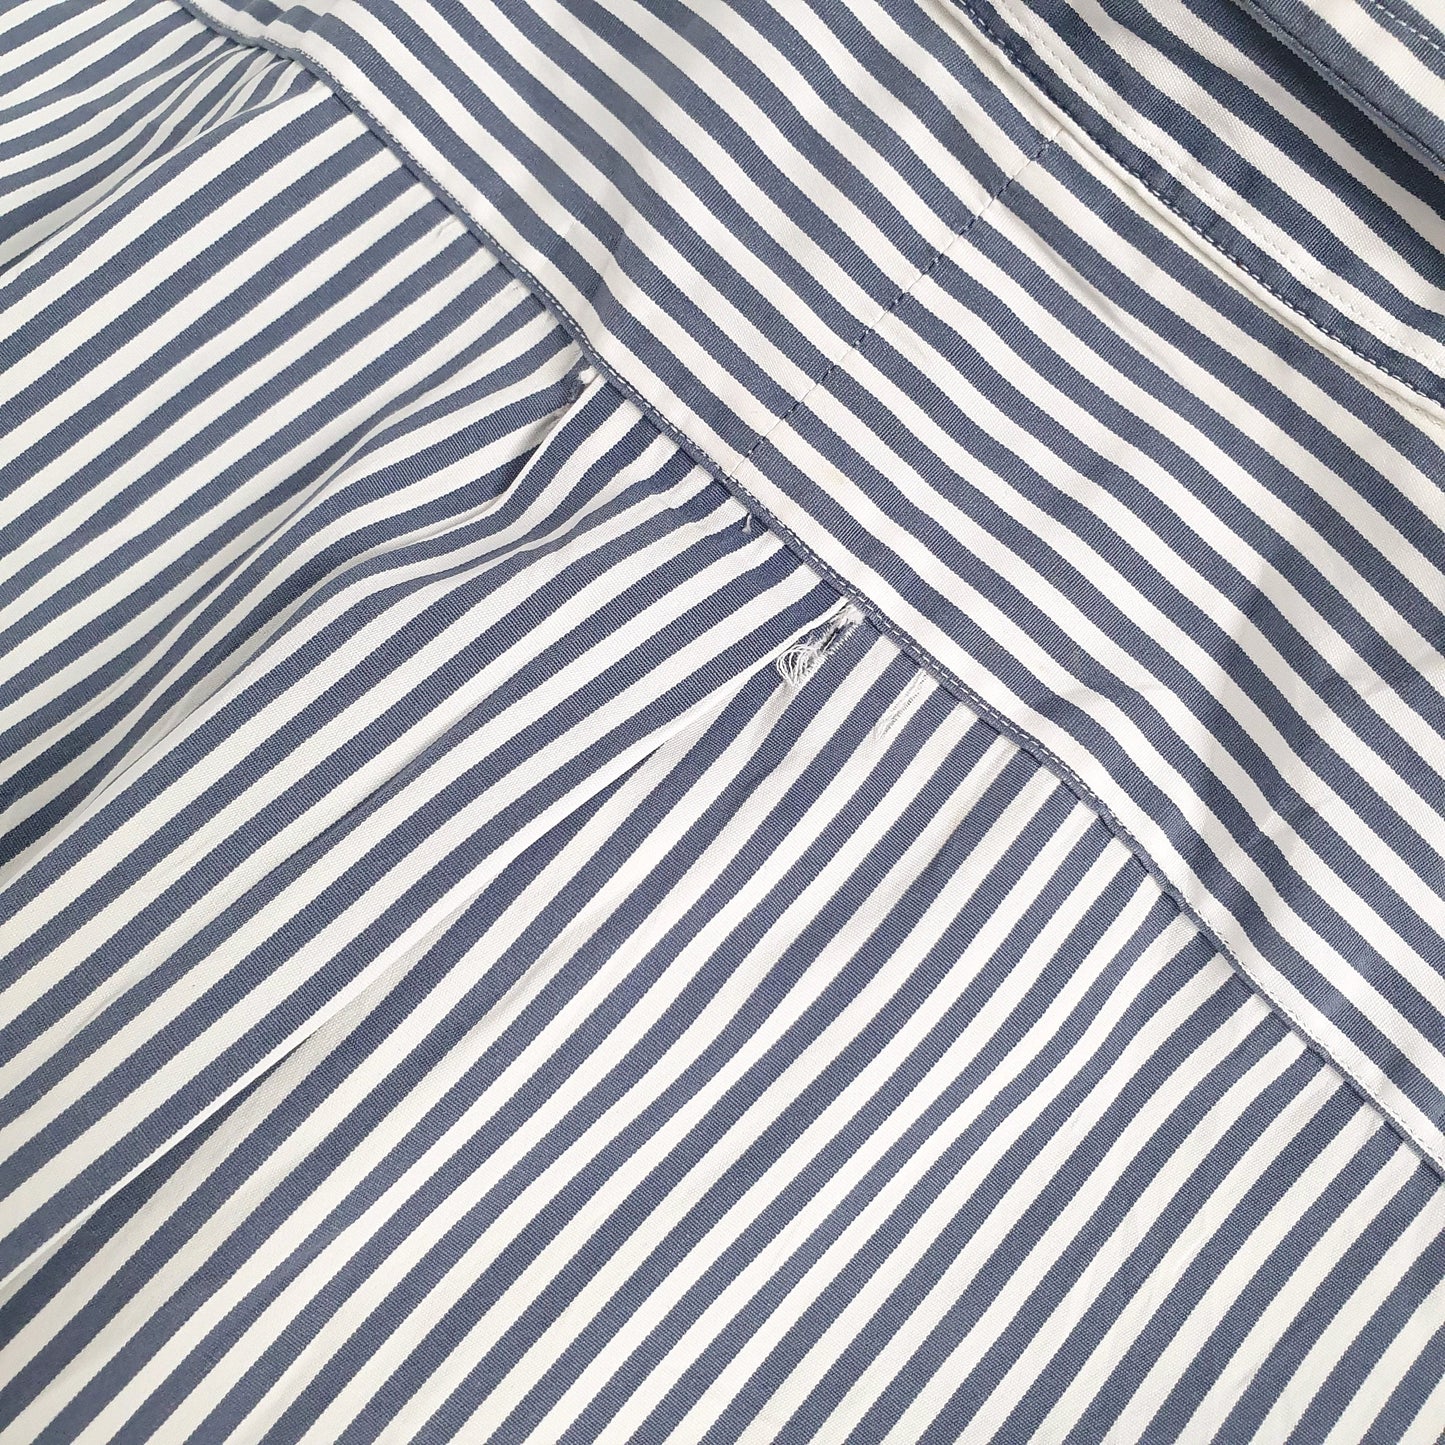 Polo Ralph Lauren Long Sleeve Classic Fit Striped Shirt